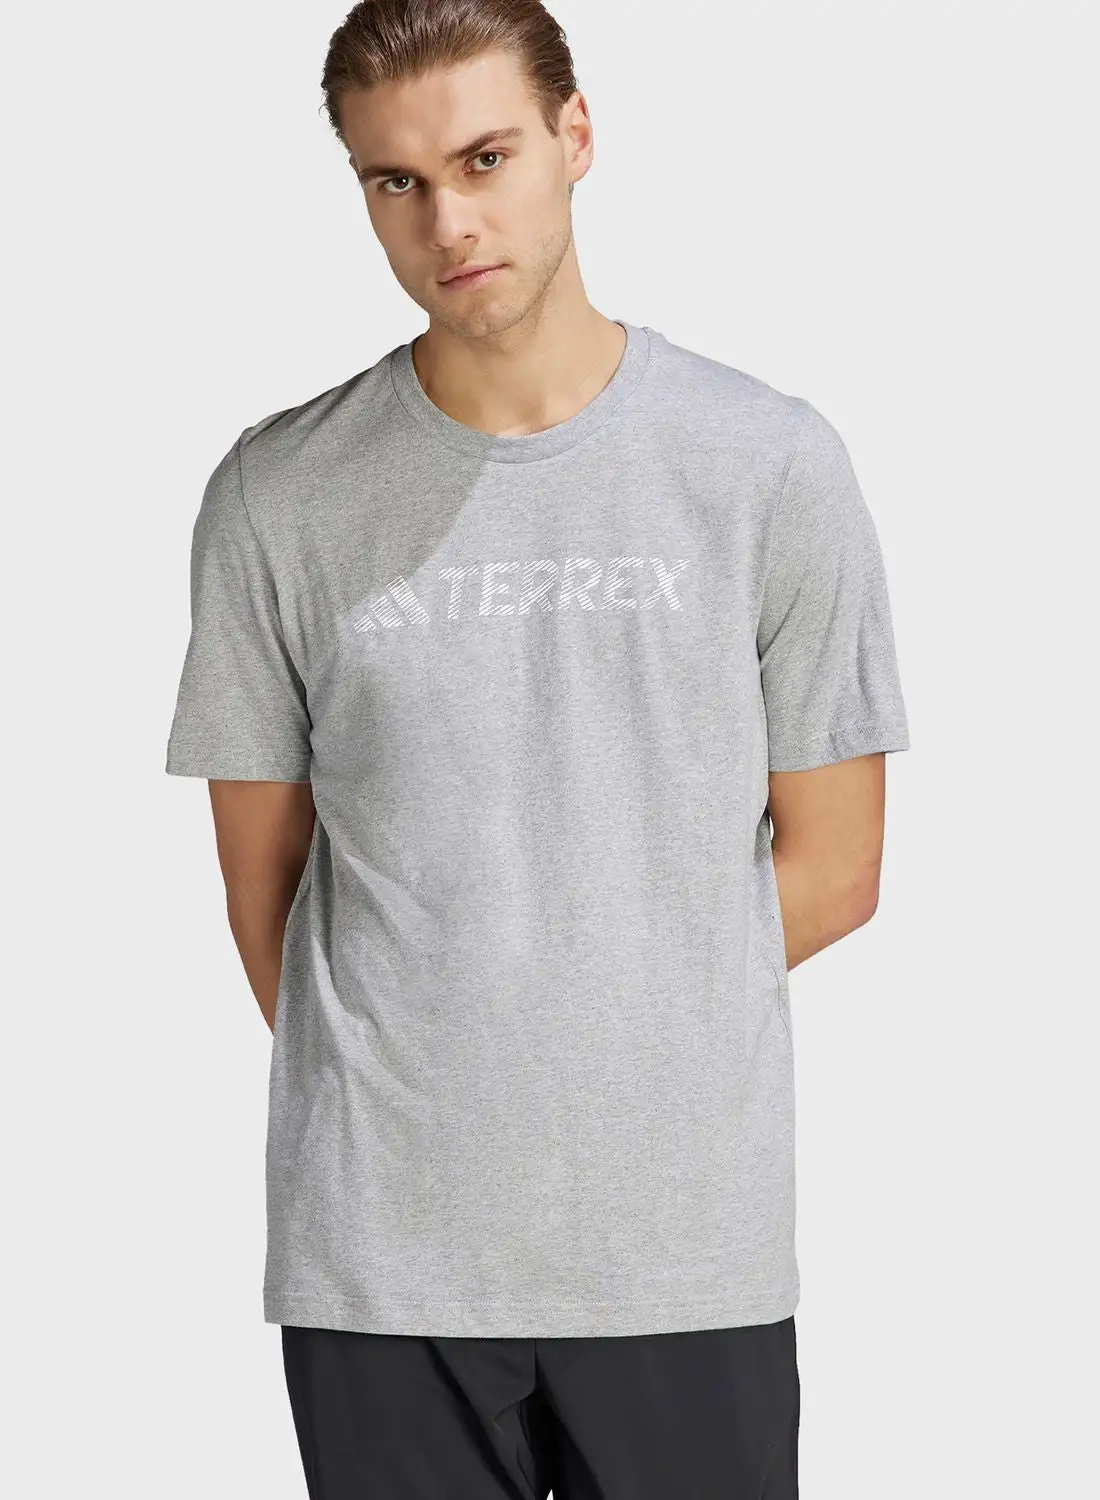 Adidas Terrex Classic Logo T-Shirt